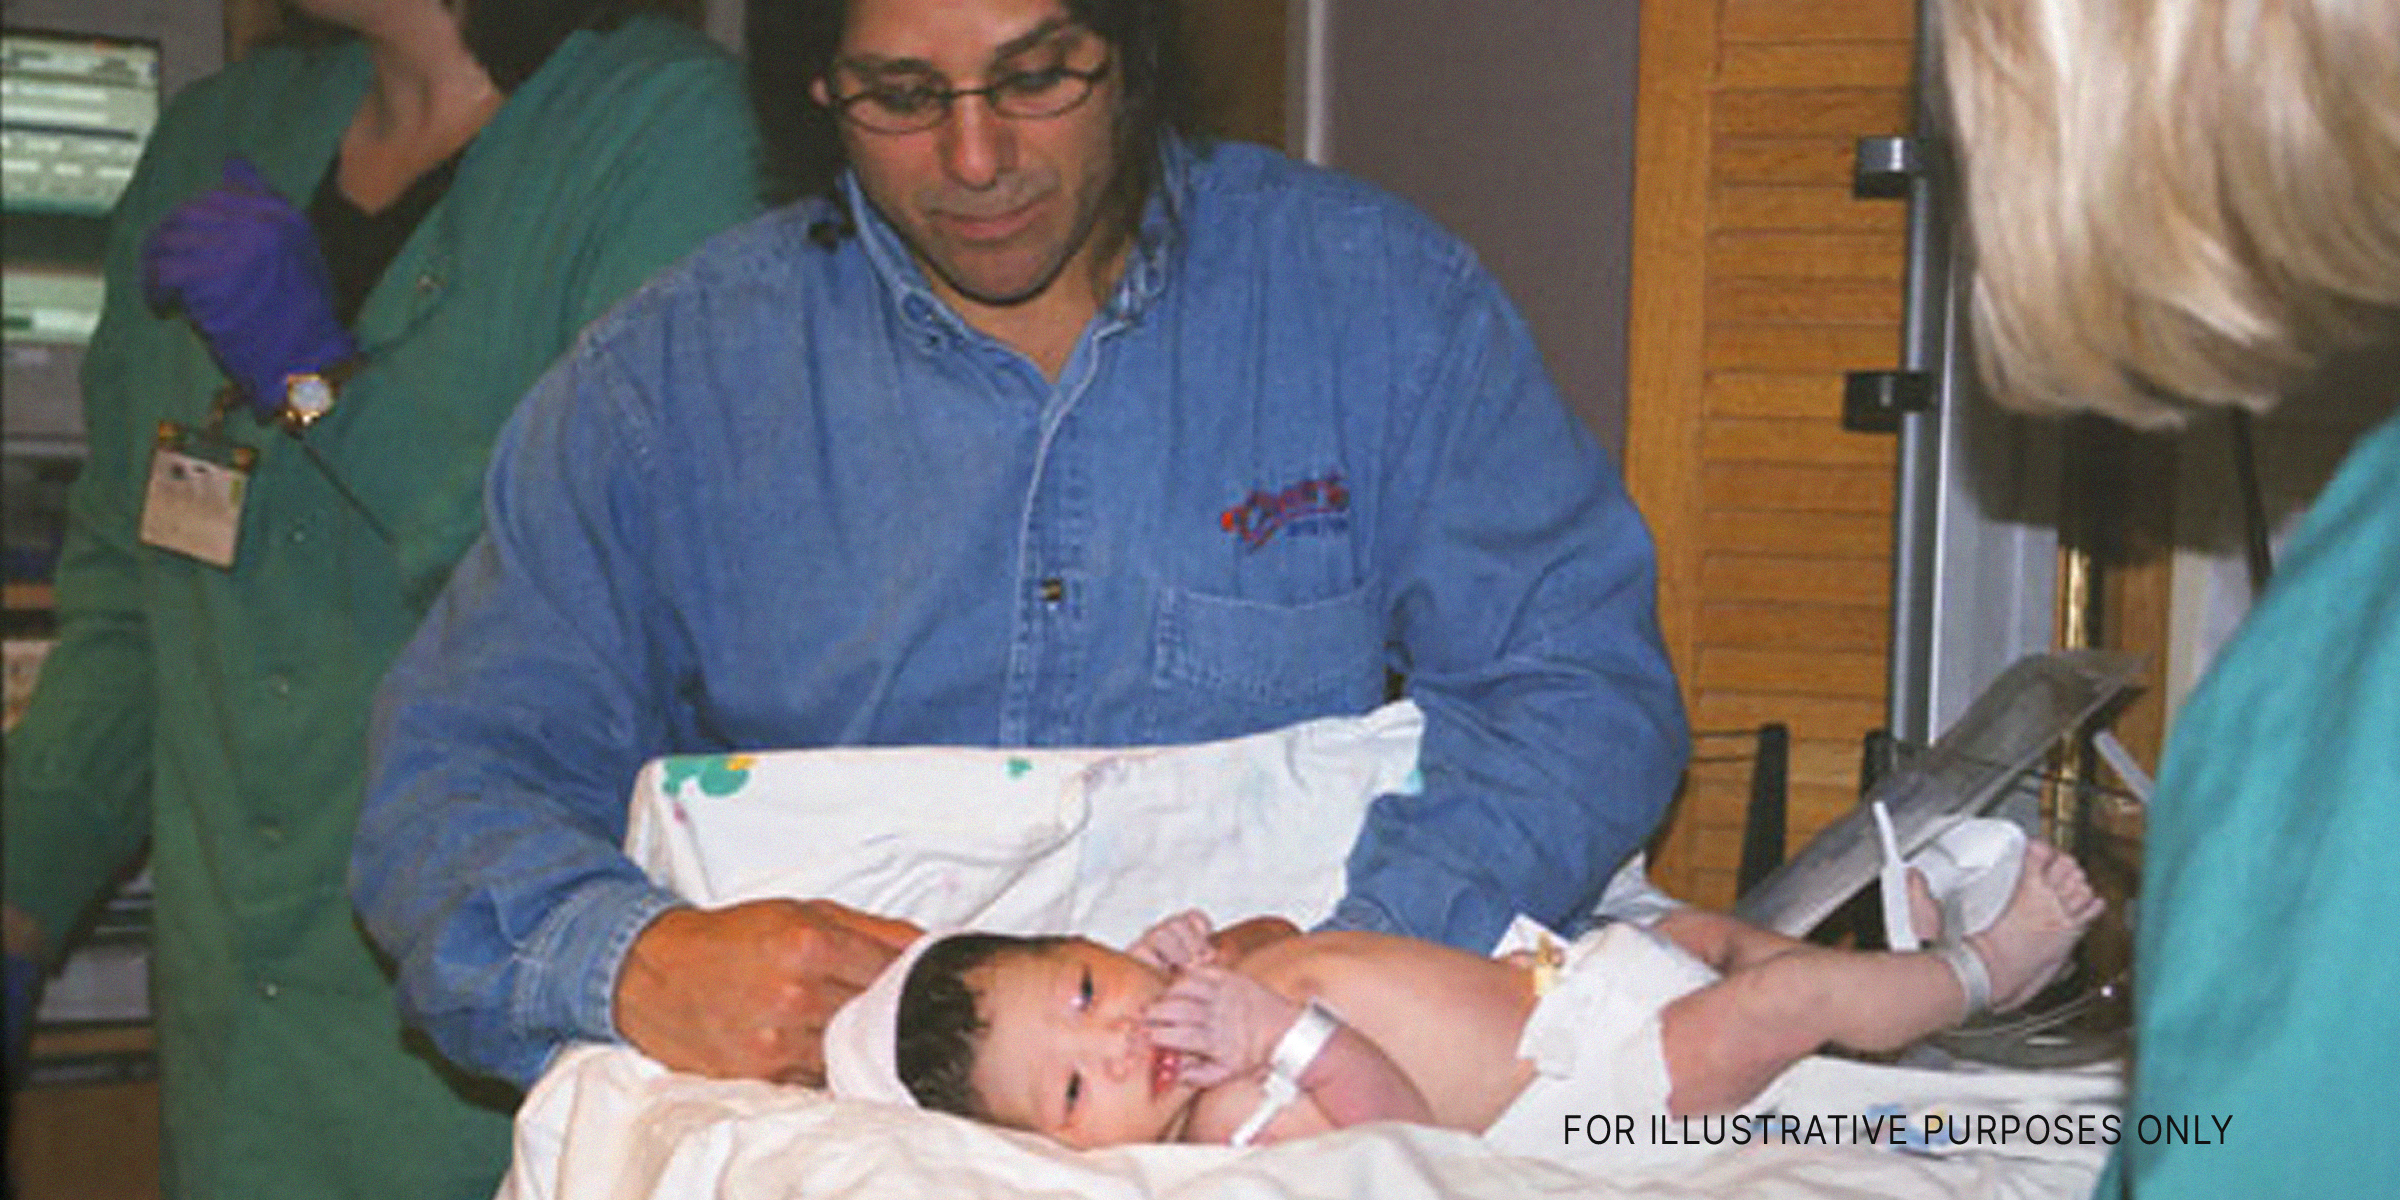 A Man Looking At His Newborn Baby | Source: Flickr.com/photos/jbach